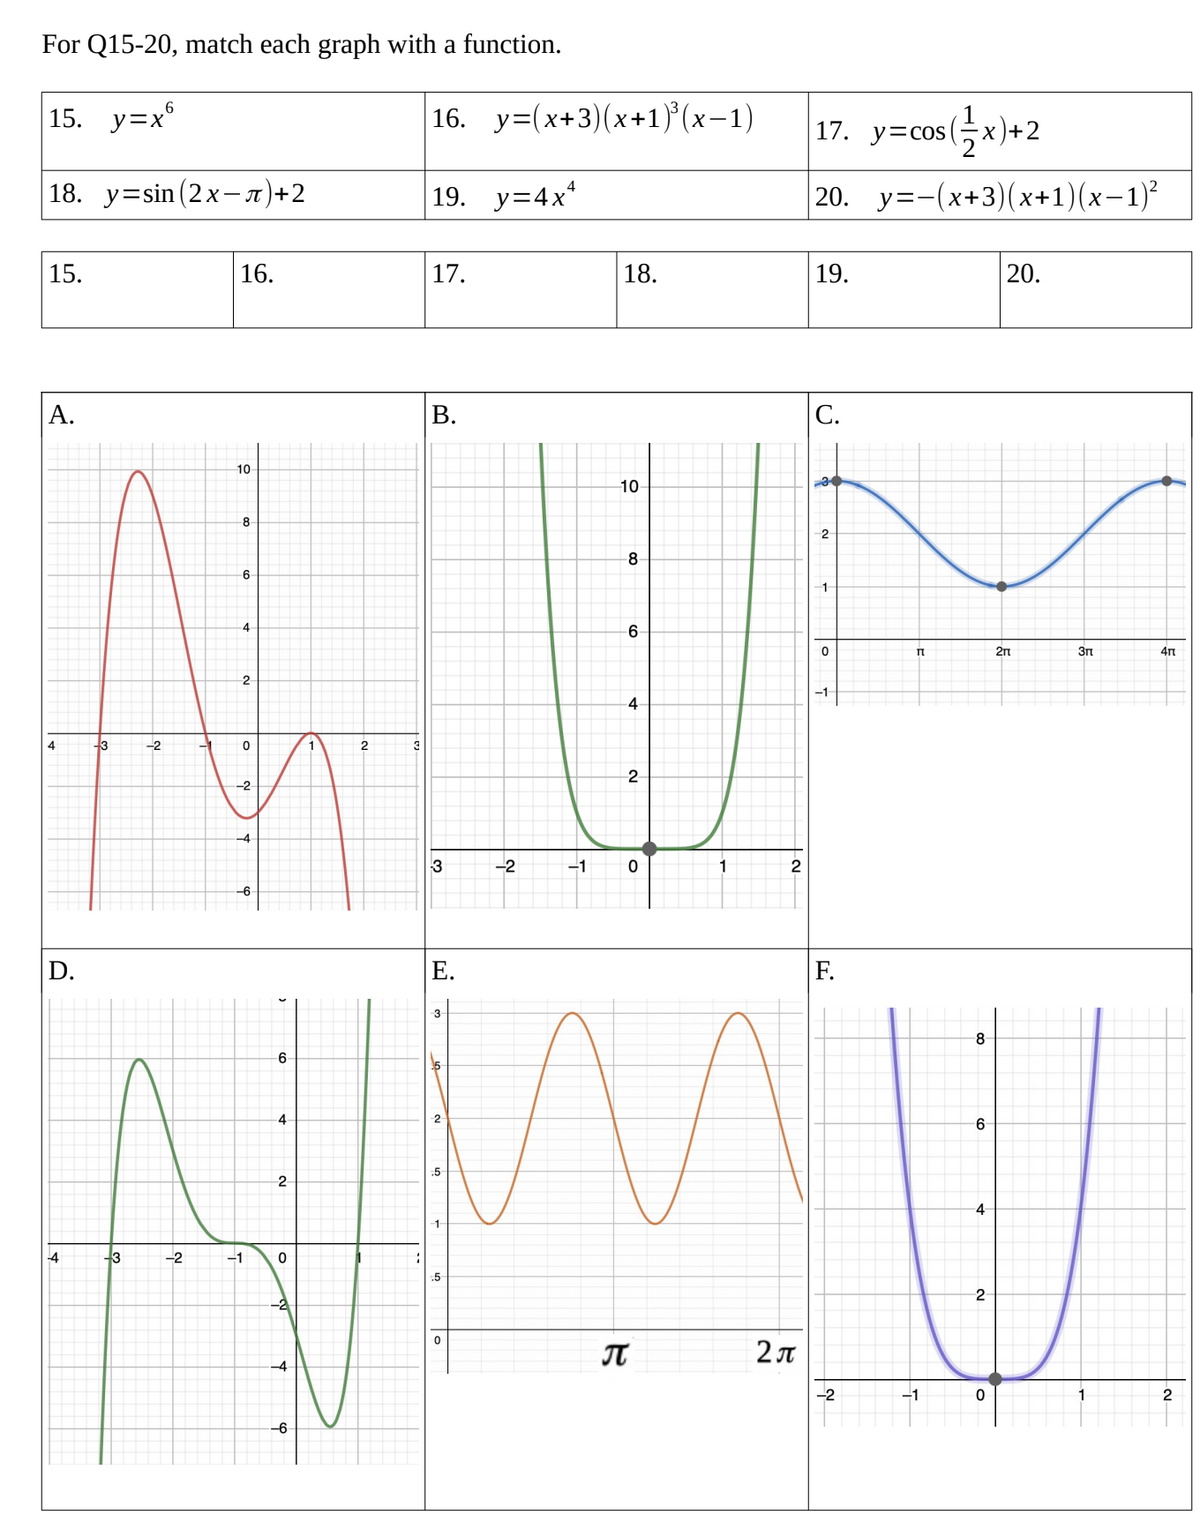 For Q15-20, match each graph with a function.
15. y=x6
18. y=sin(2x-л)+2
15.
16.
A.
4
D.
-4
-3
-3
-2
-2
10
8
6
4
2
0
N
-2
-4
-6
-1
-6
4
2
0
-2
-4
-6
2
16. y=(x+3)(x+1)³(x-1)
19. y=4x¹
17.
18.
B.
3
10
8
6
-4
-2
2rt
3rt
4rt
3
-1
1
2
E.
F.
3
8
2
6
:5
MU
-4
-1
5
2
0
2 П
-2
-1
1
2
17. y=cos(x)+2
20. y=-(x+3)(x+1)(x-1)²
19.
20.
C.
2
1
0
2
0
-1
П